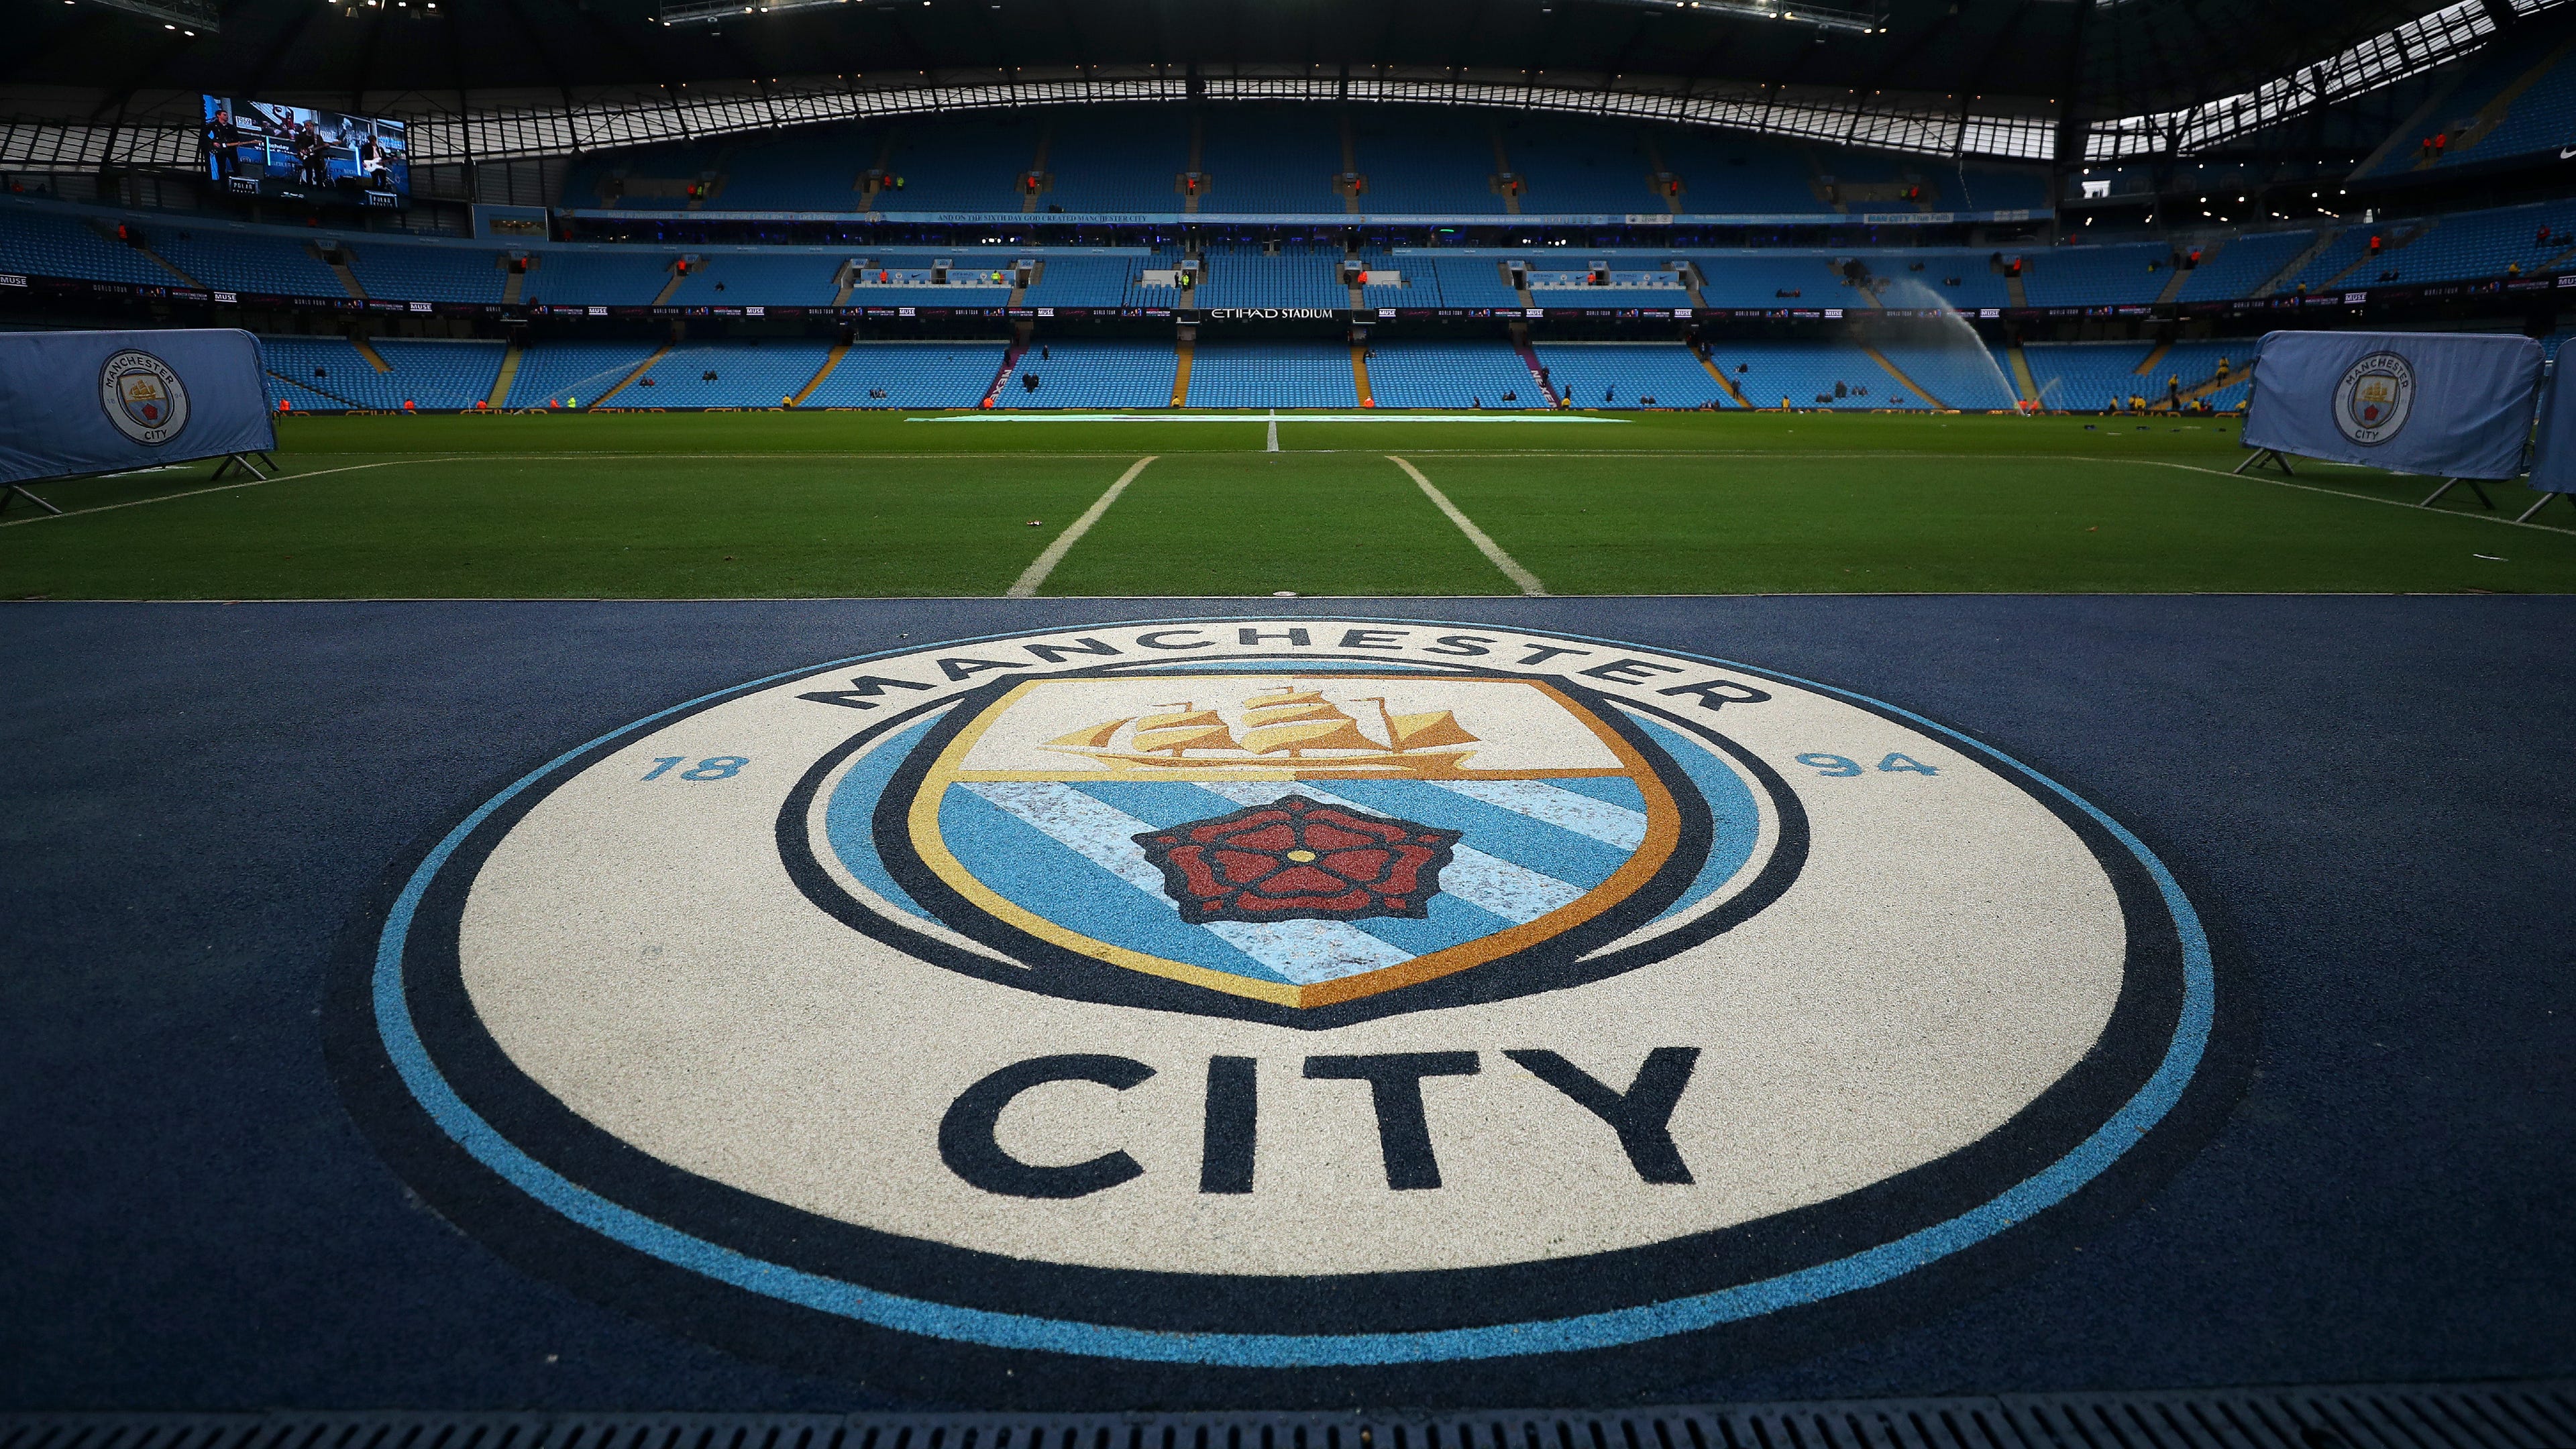 Etihad Stadium/Manchester City logo